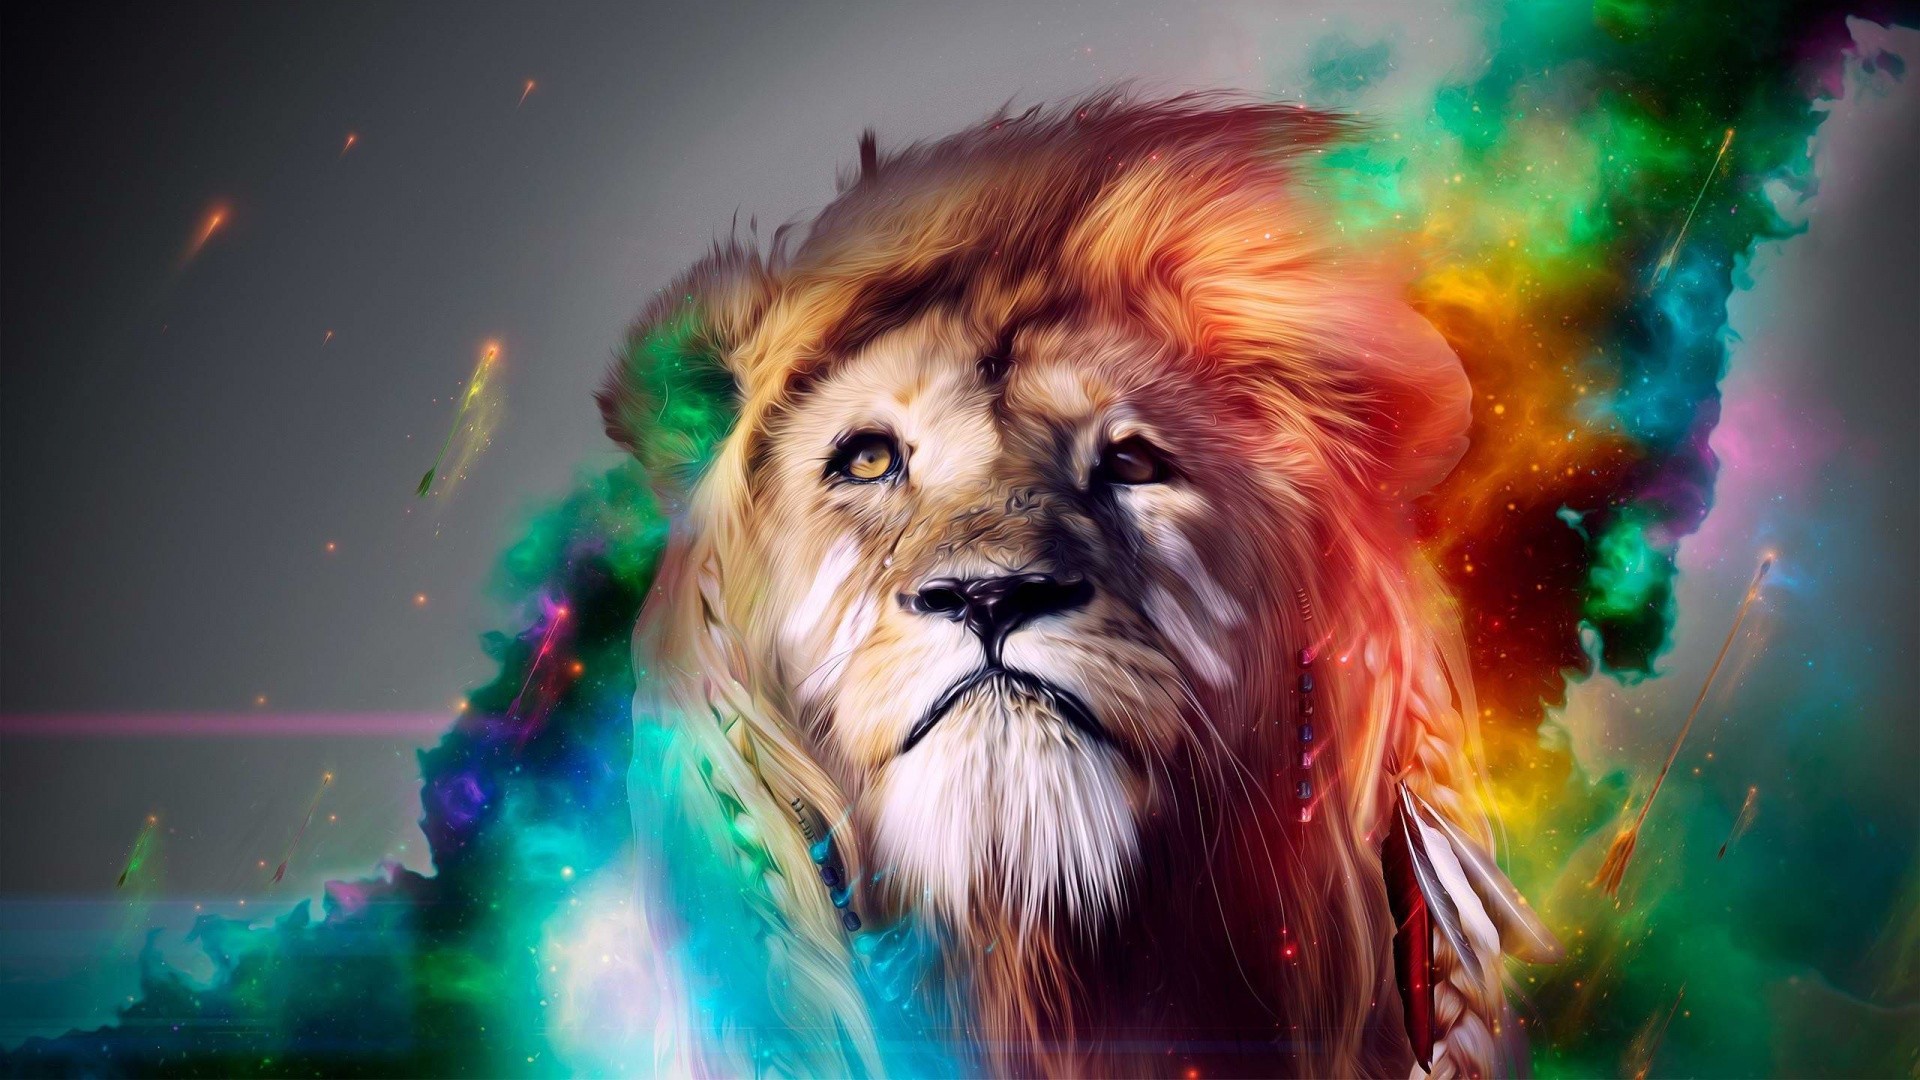 General 1920x1080 lion colorful artwork mammals animals digital art